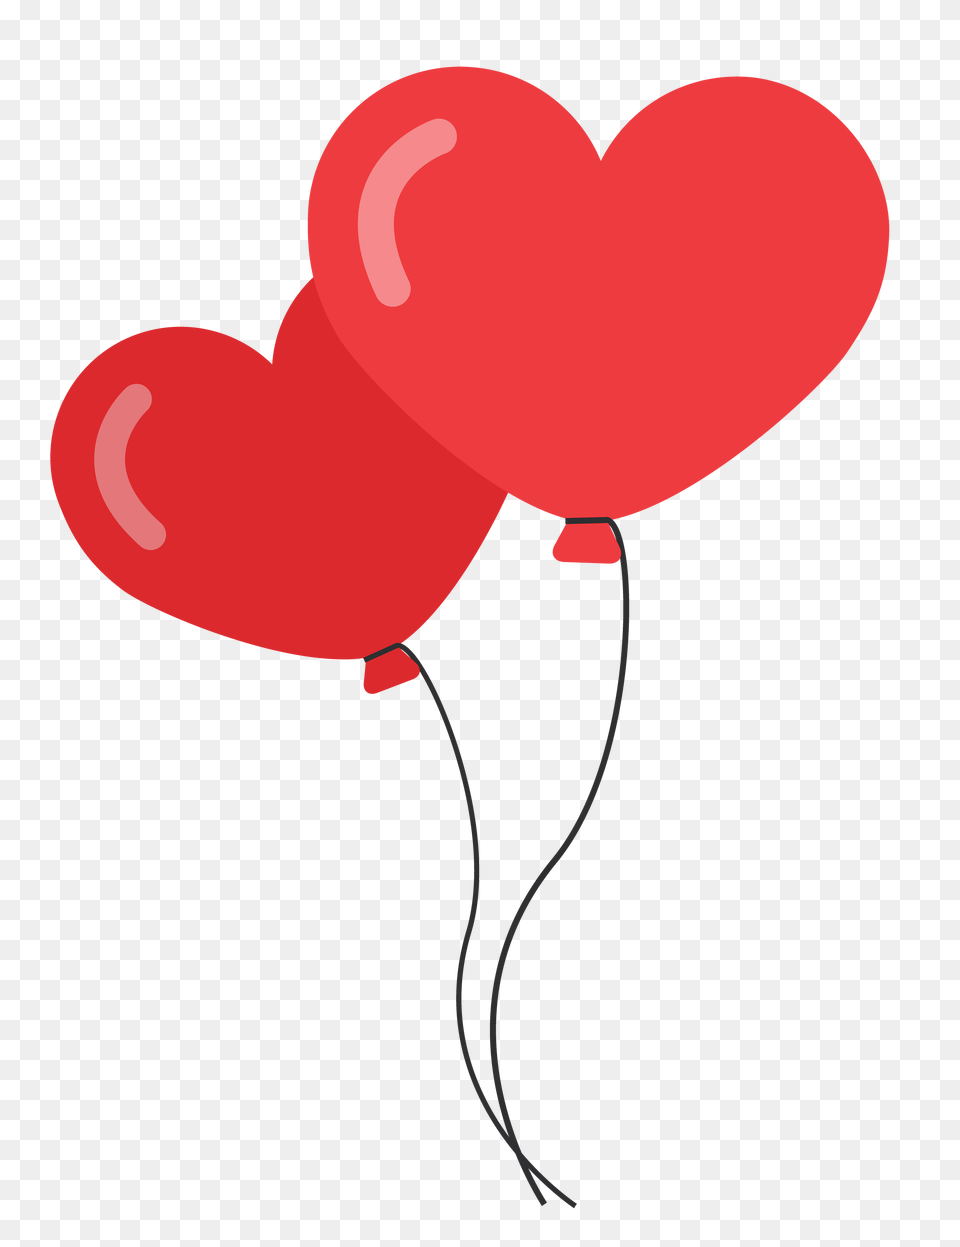 Pngpix Com Heart Shaped Balloons, Flower, Plant, Carnation, Rose Png Image